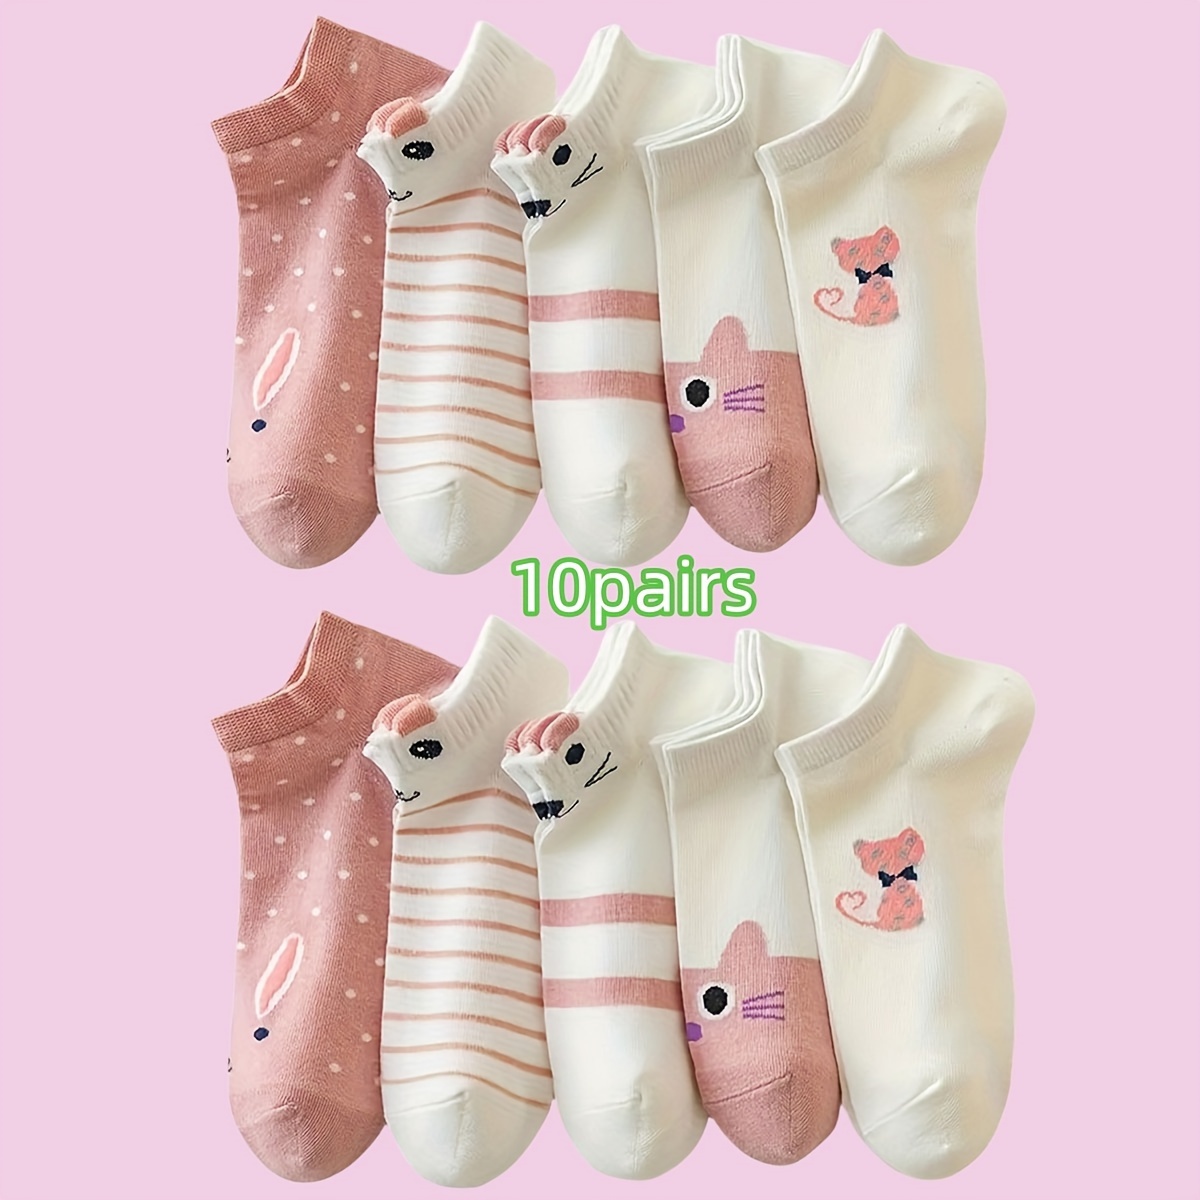 

10 Pairs Women's Cartoon Cat Ankle Socks Boat Socks, Summer Breathable Comfortable Ankle Socks Athletic Socks